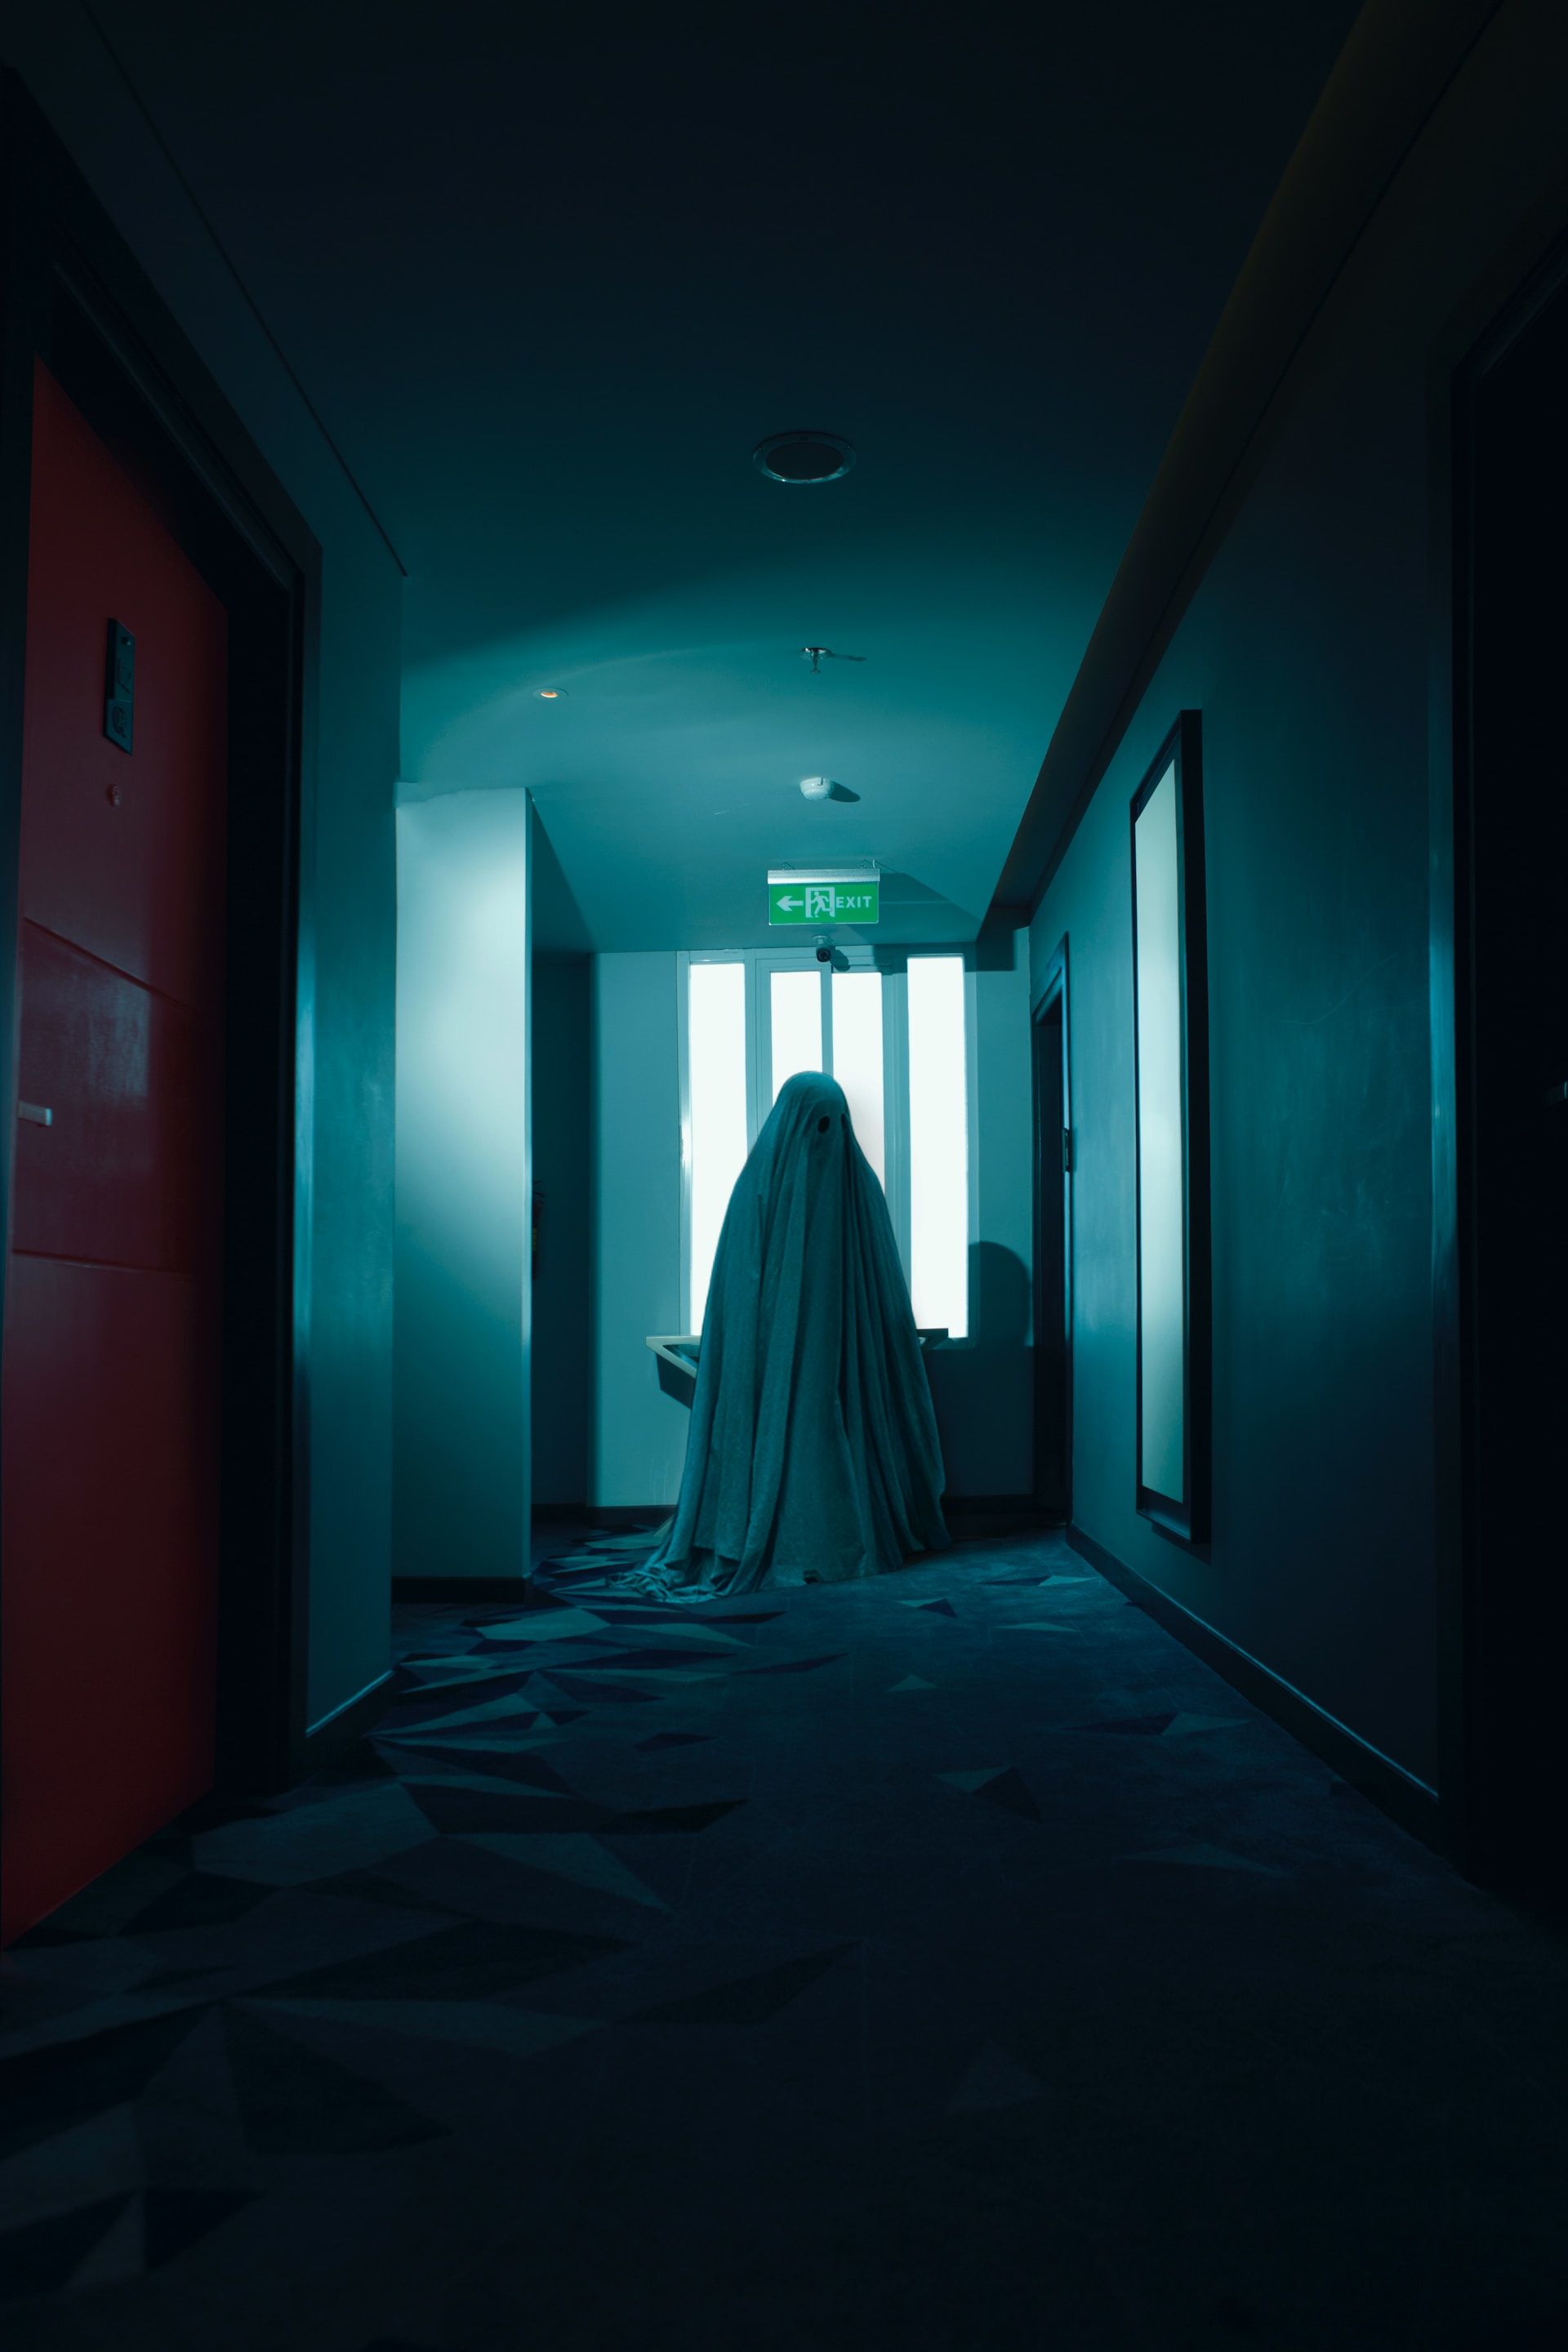 Ghost in a hotel corridor